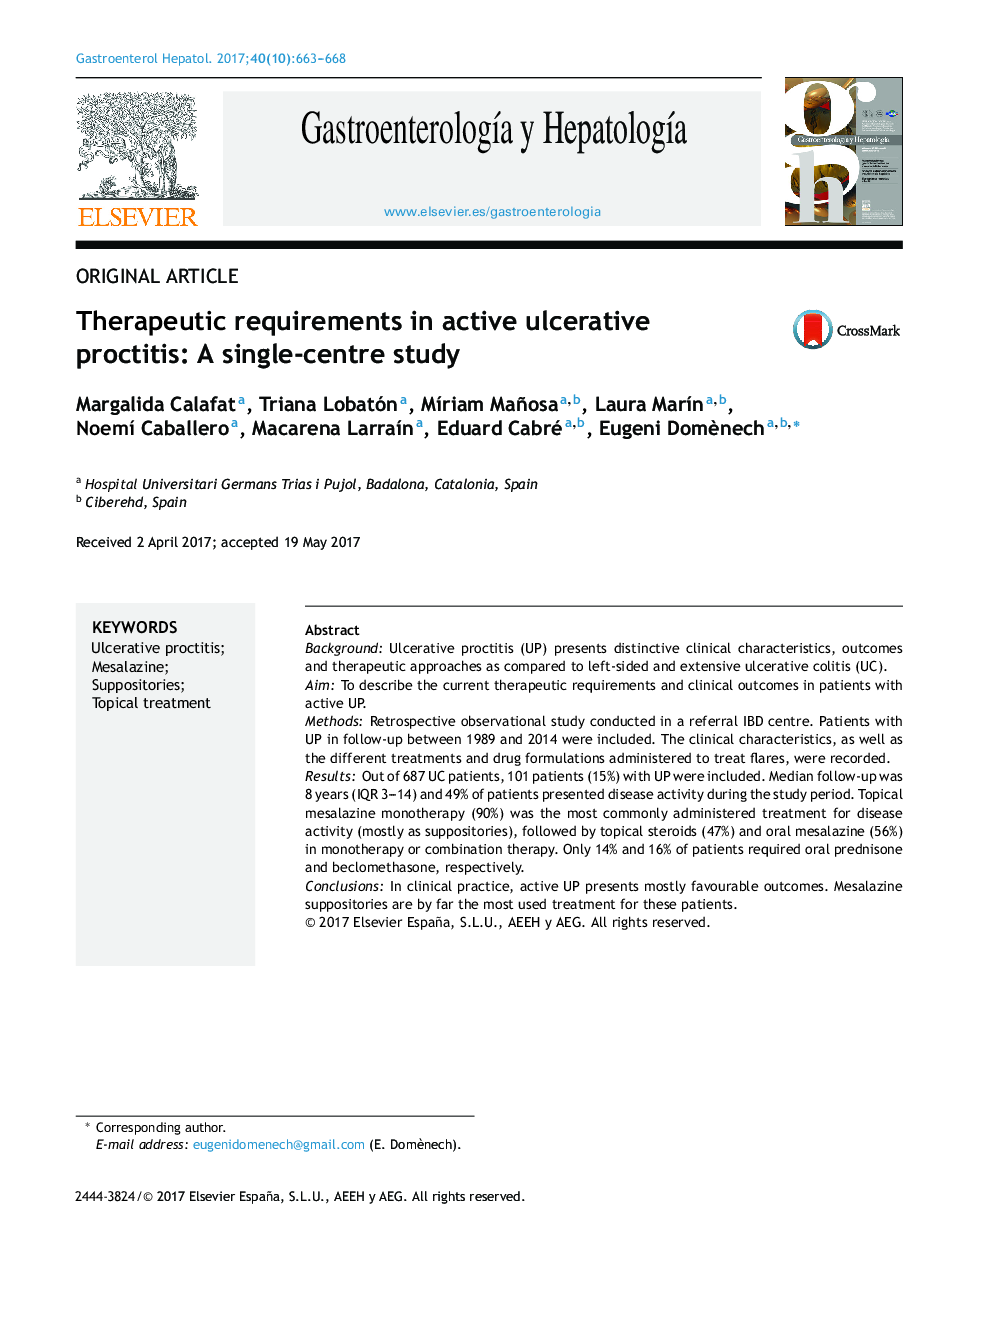 Therapeutic requirements in active ulcerative proctitis: A single-centre study